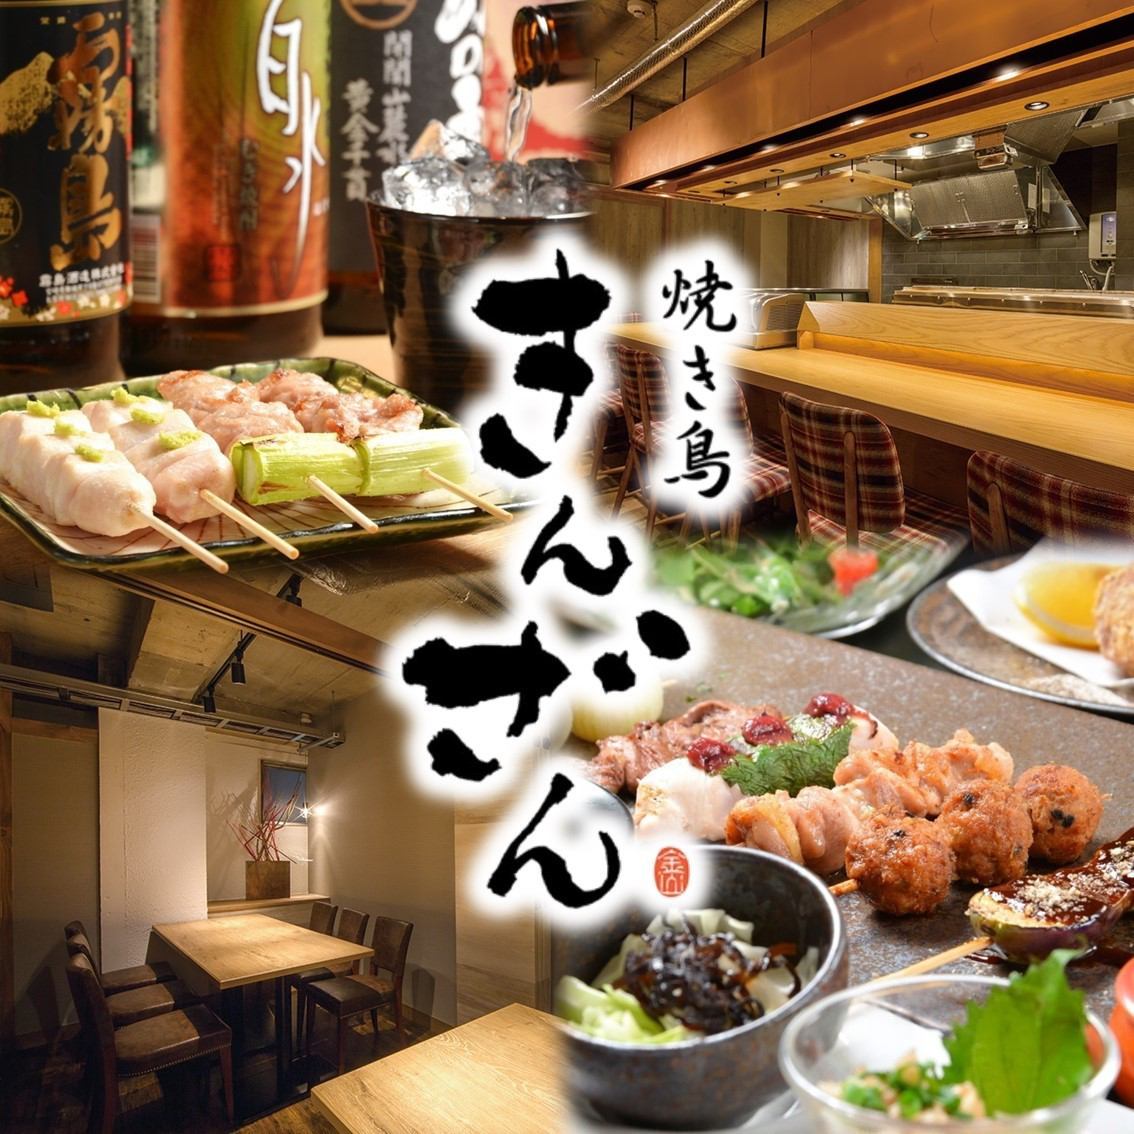 Nagoya's famous yakitori restaurant "Kinzan" ♪ Enjoy exquisite yakitori in a stylish space ♪